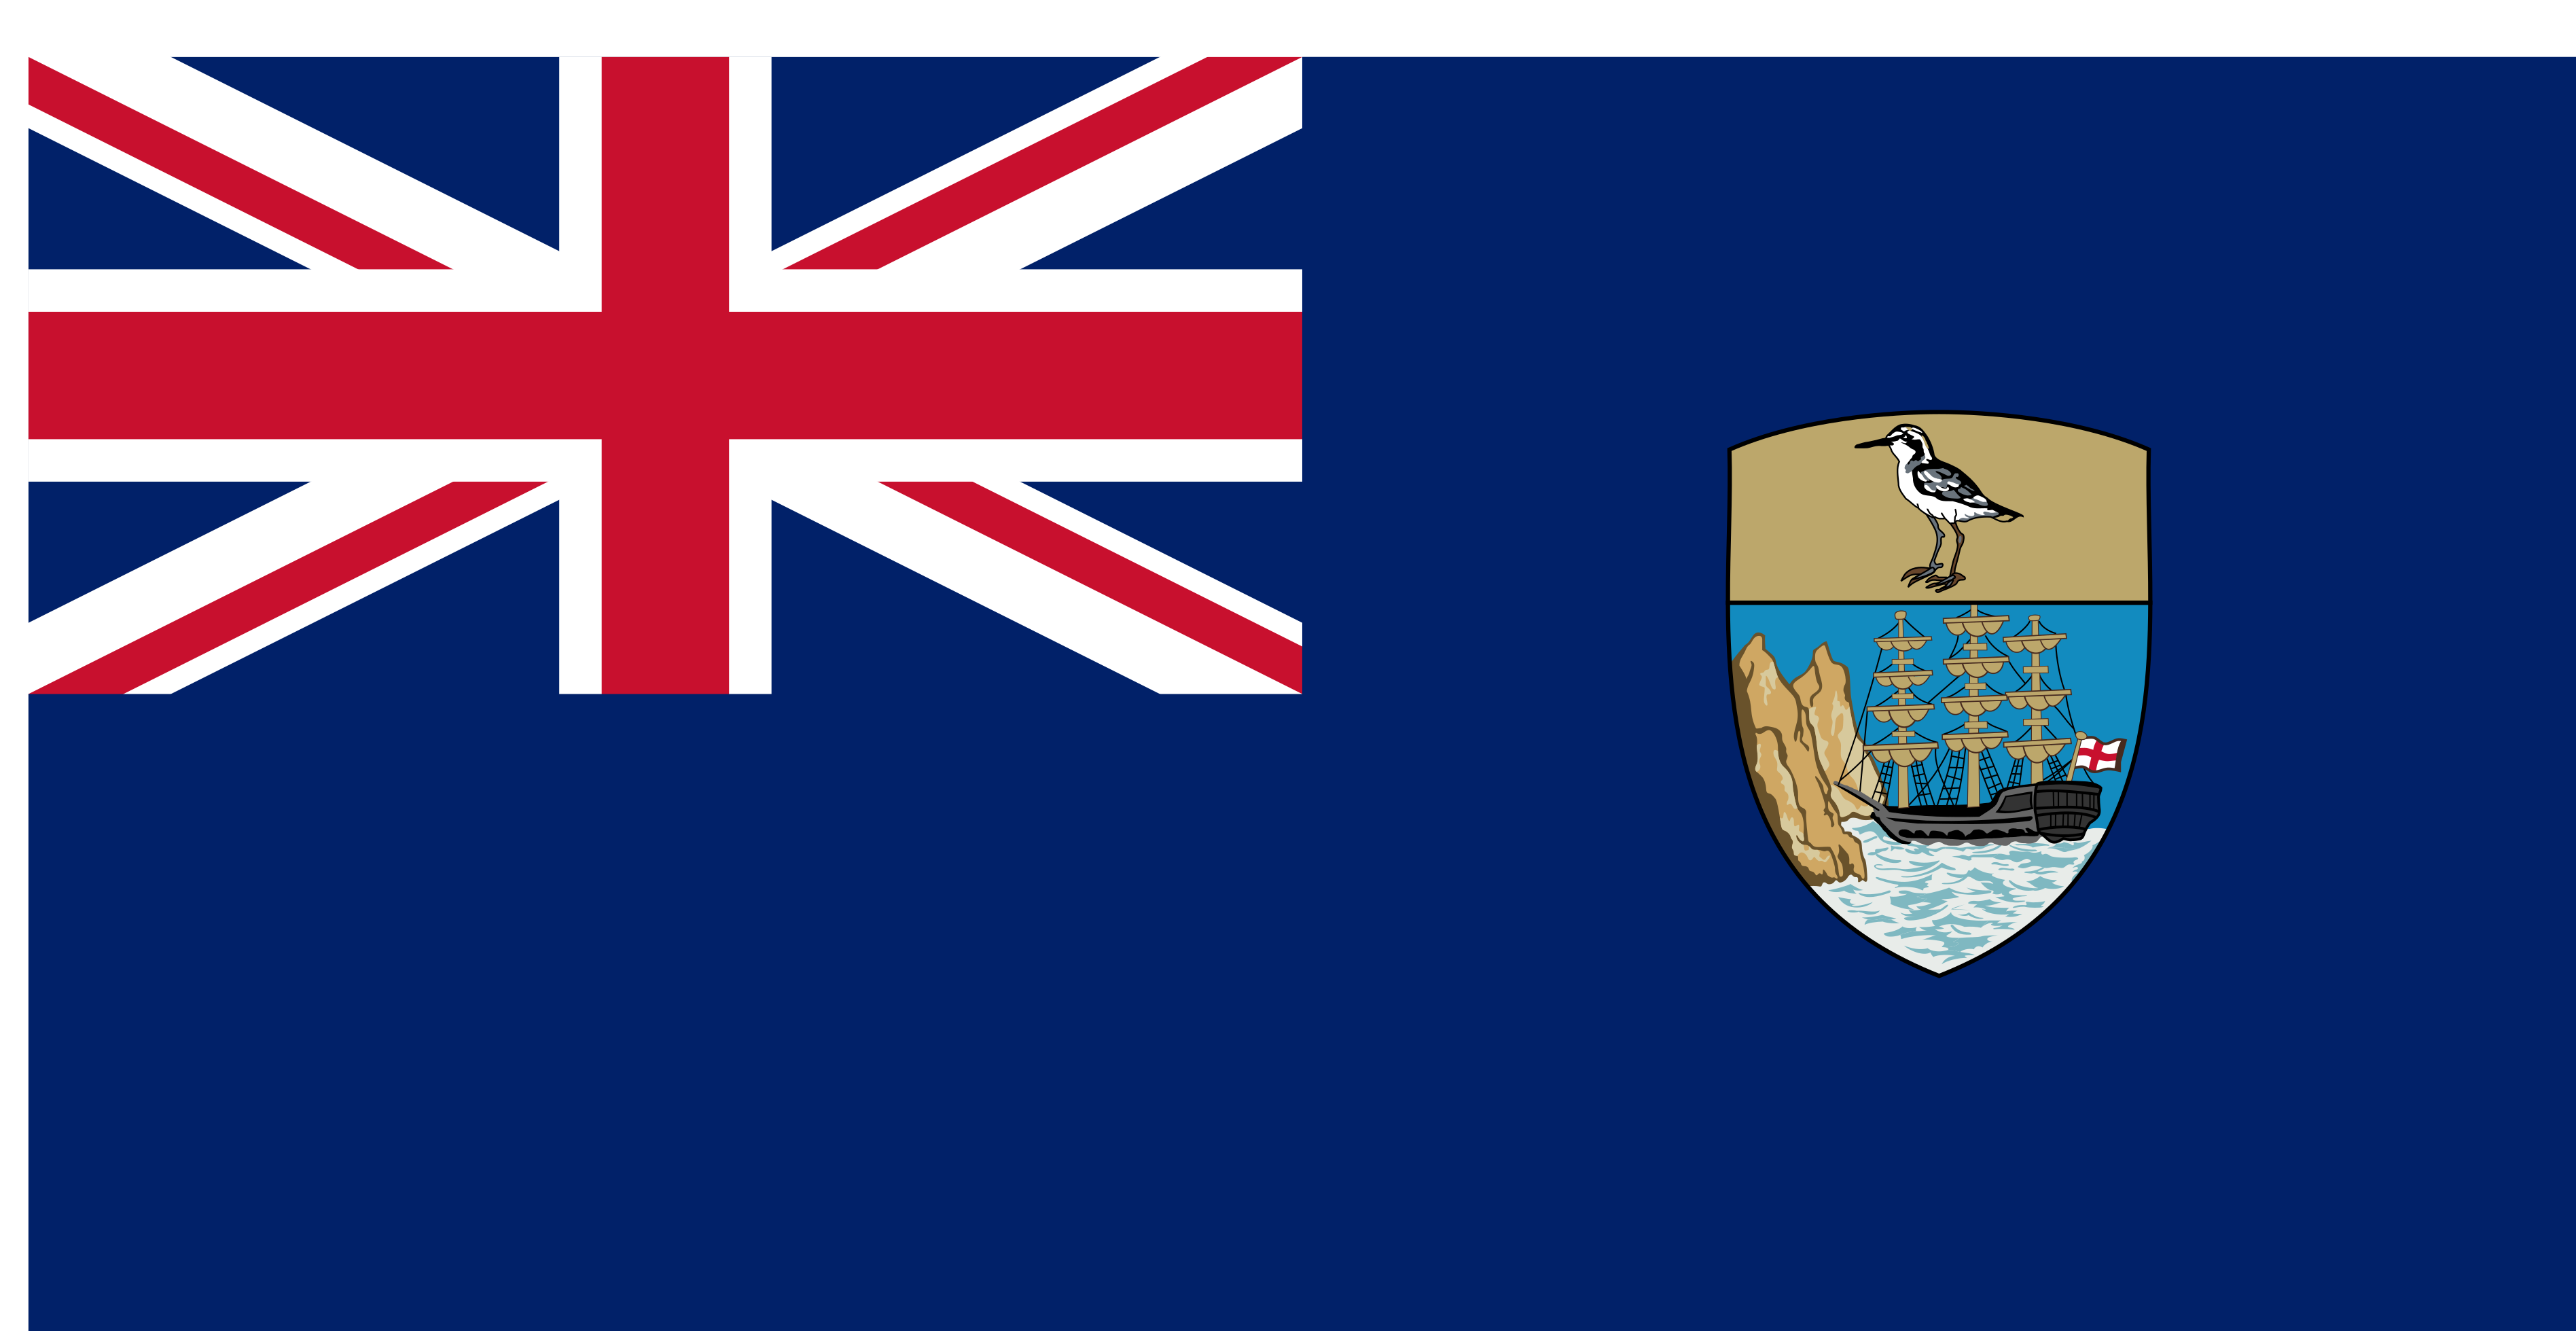 Saint Helena Flag Image - Free Download